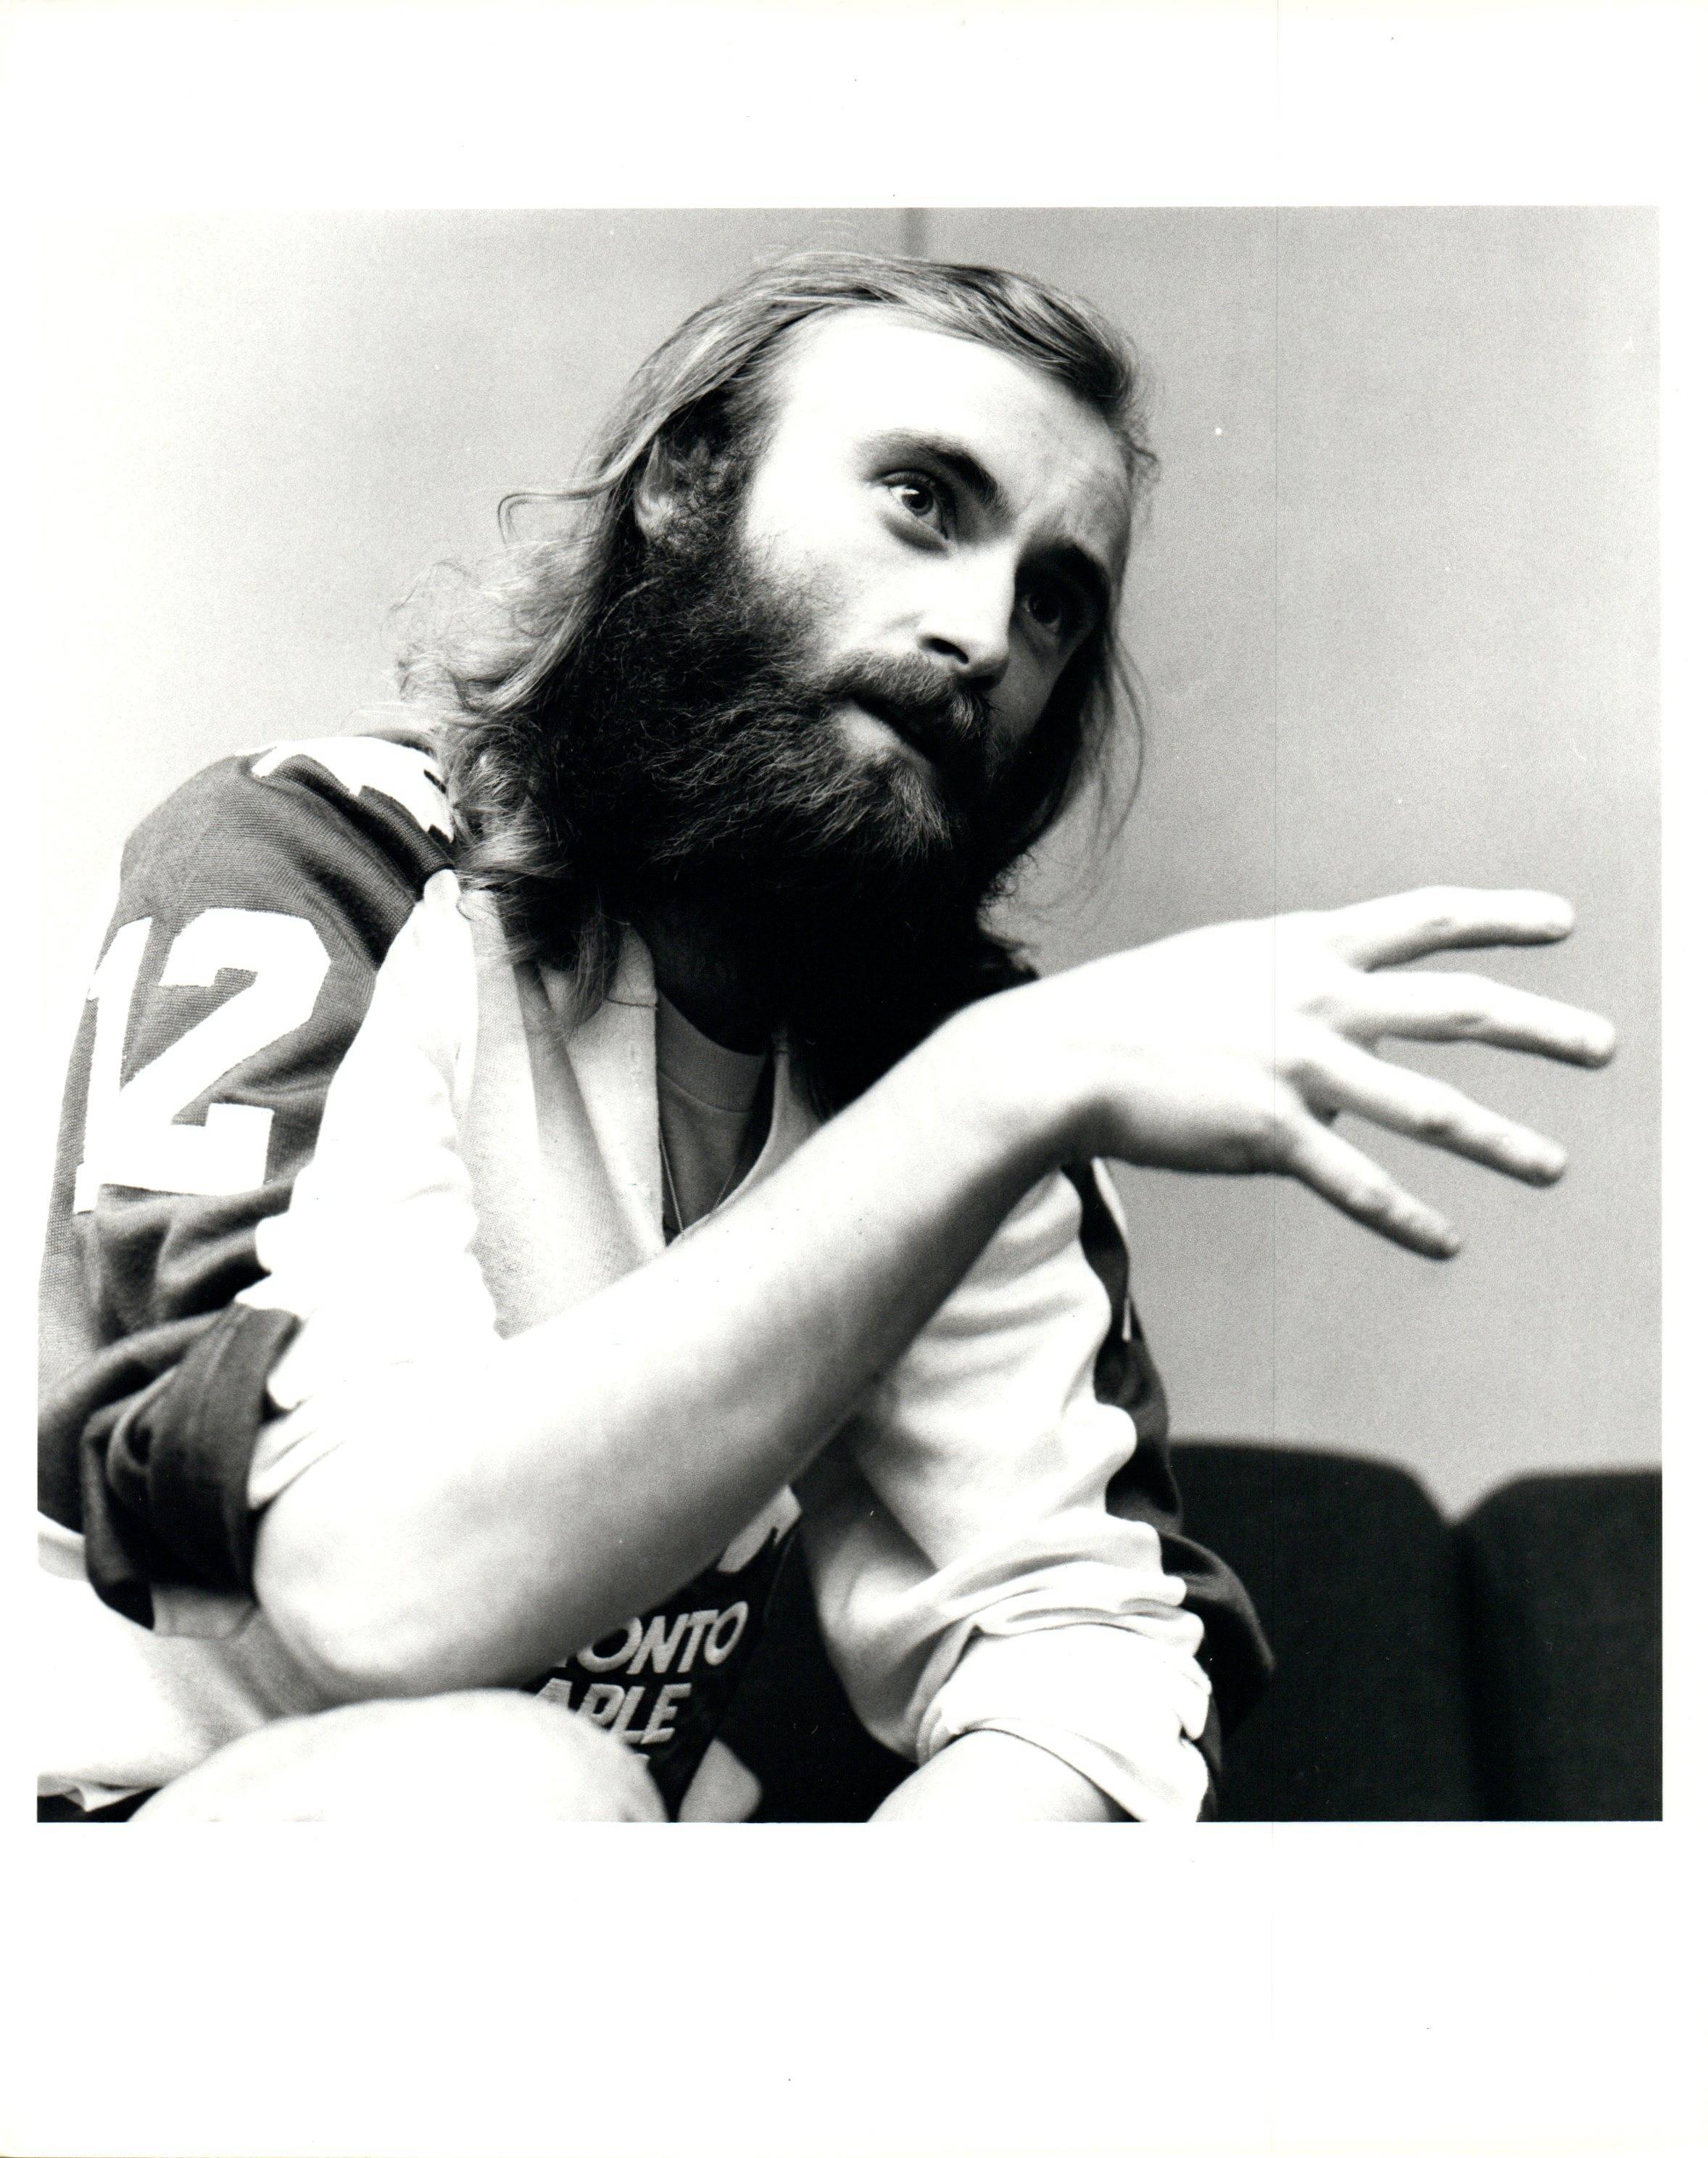 Paul Canty Portrait Photograph - Phil Collins Talking With Hands Vintage Original Photograph